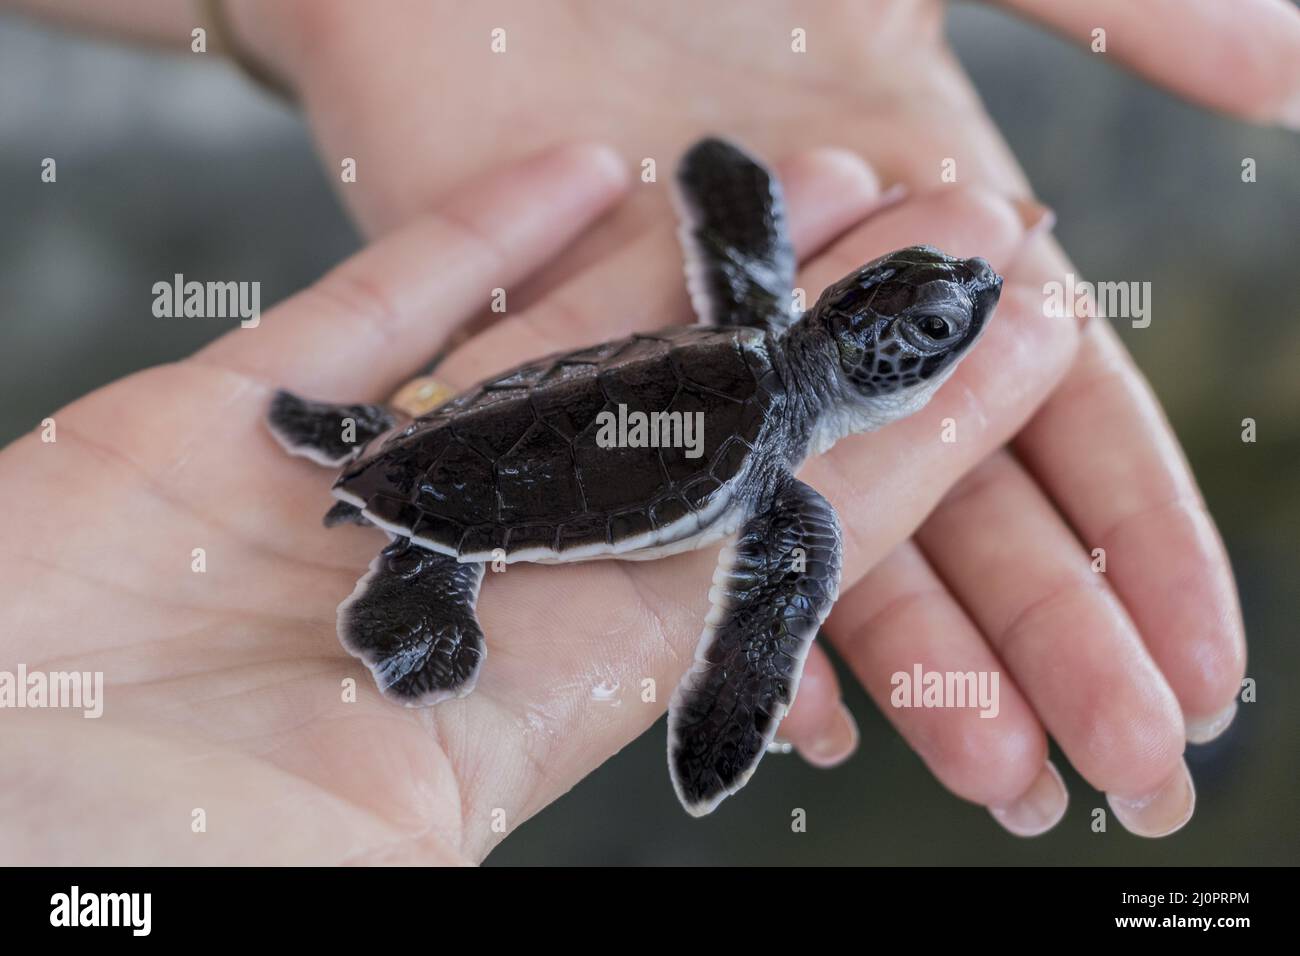 Black baby turtle on hands. Stock Photo